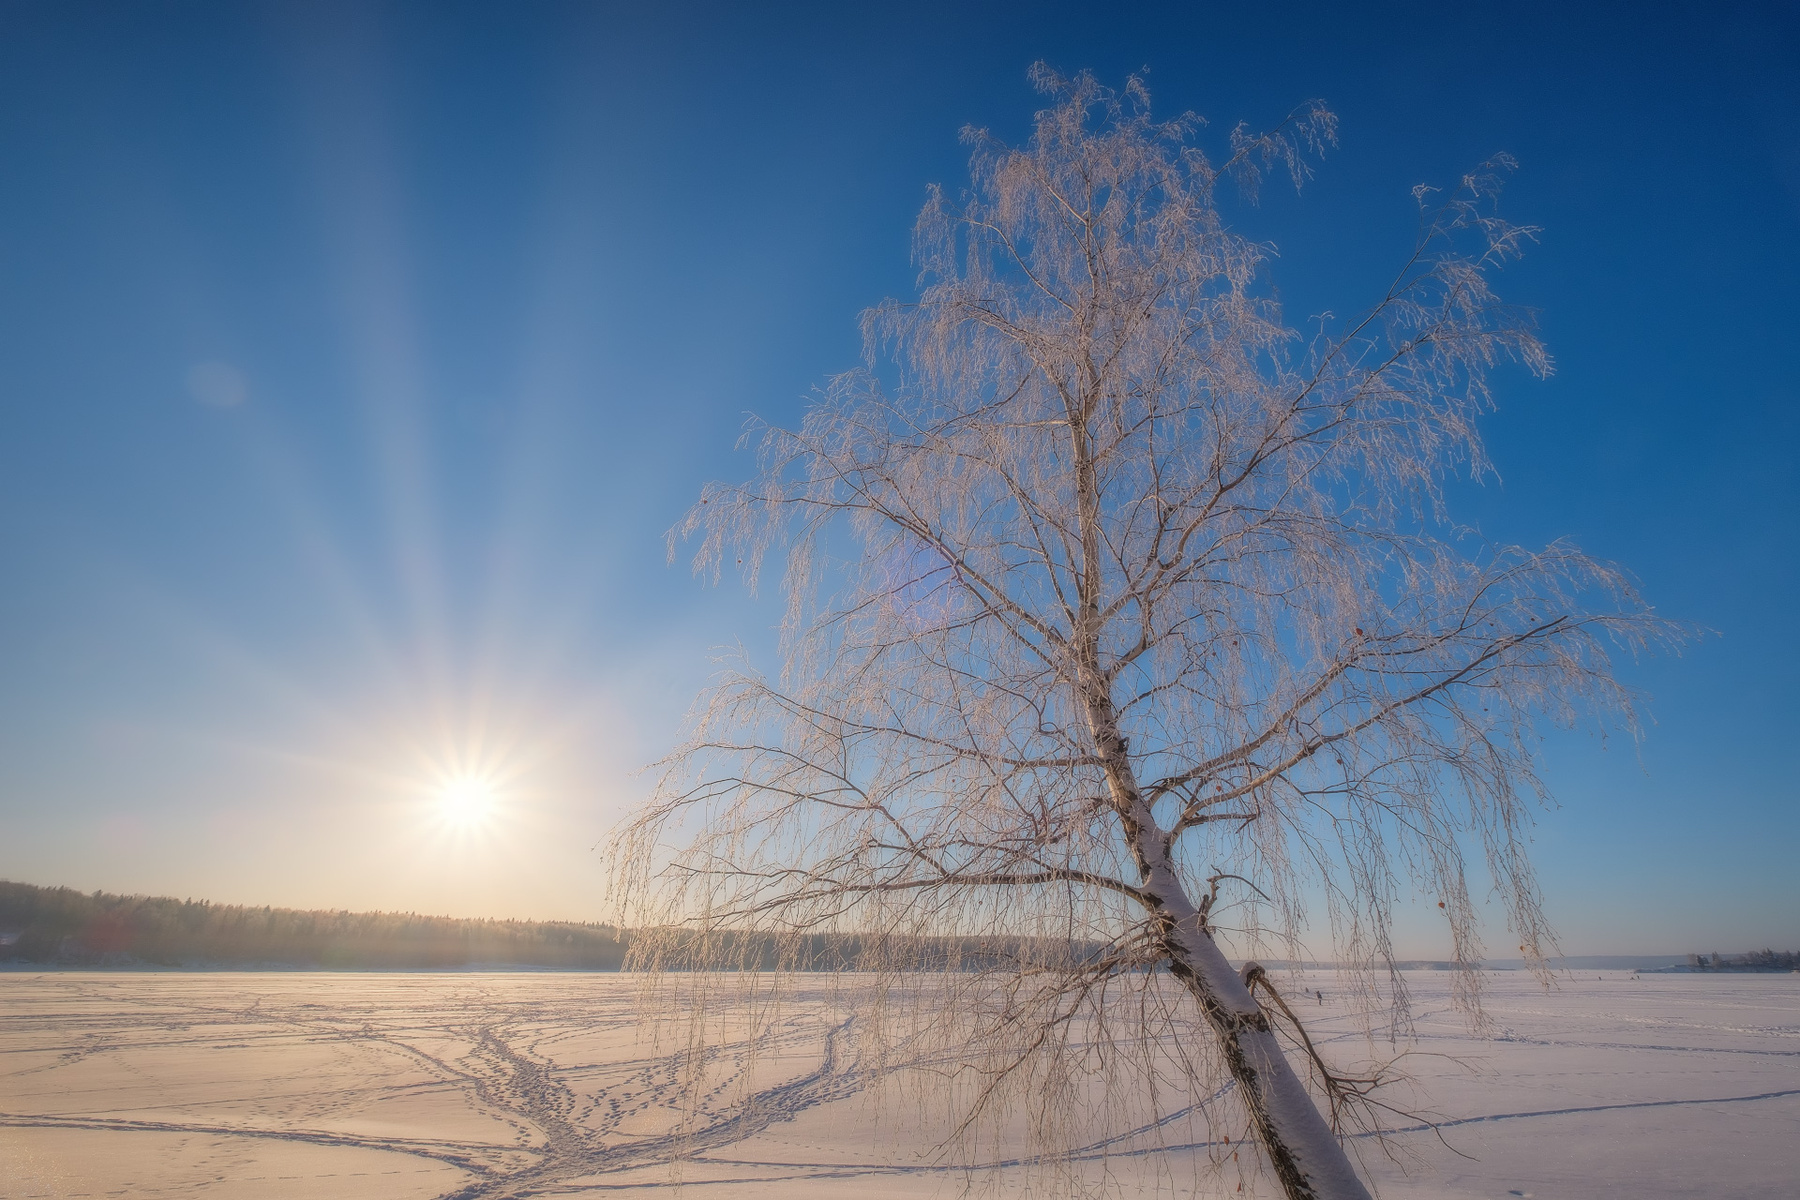 Мороз и солнце урал зима река лед снег деревья рассвет утро береза рыбаки солнце лучи